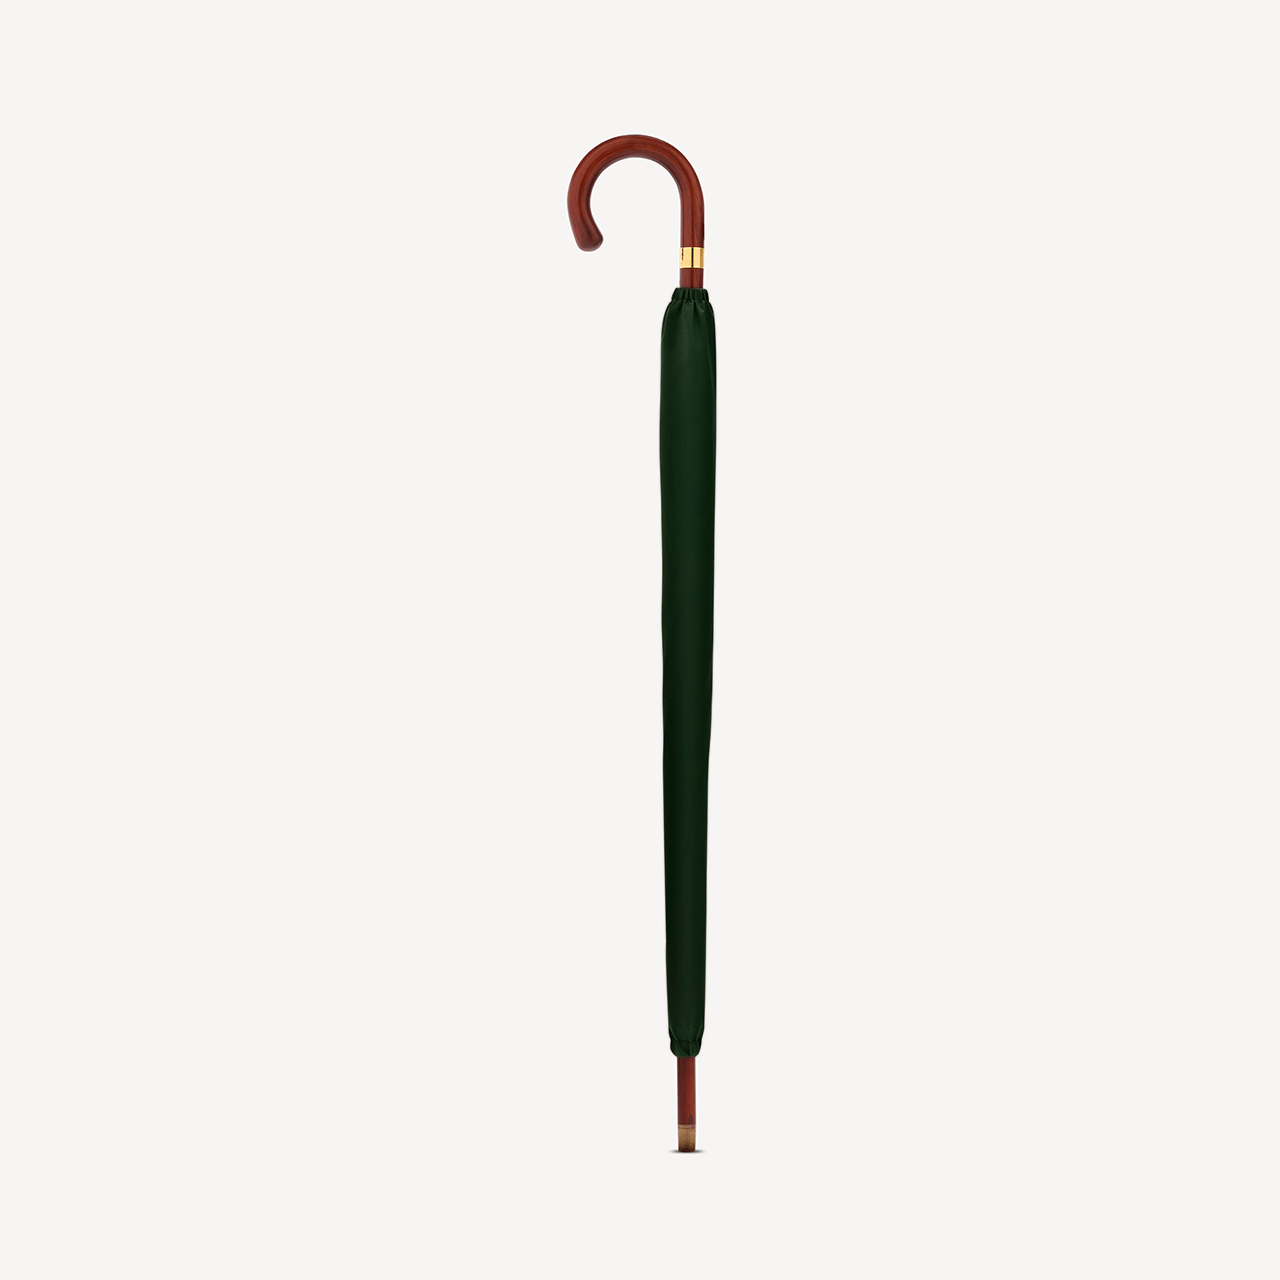 Stripped Cherry Umbrella for Men - Jaguar Green - Swaine